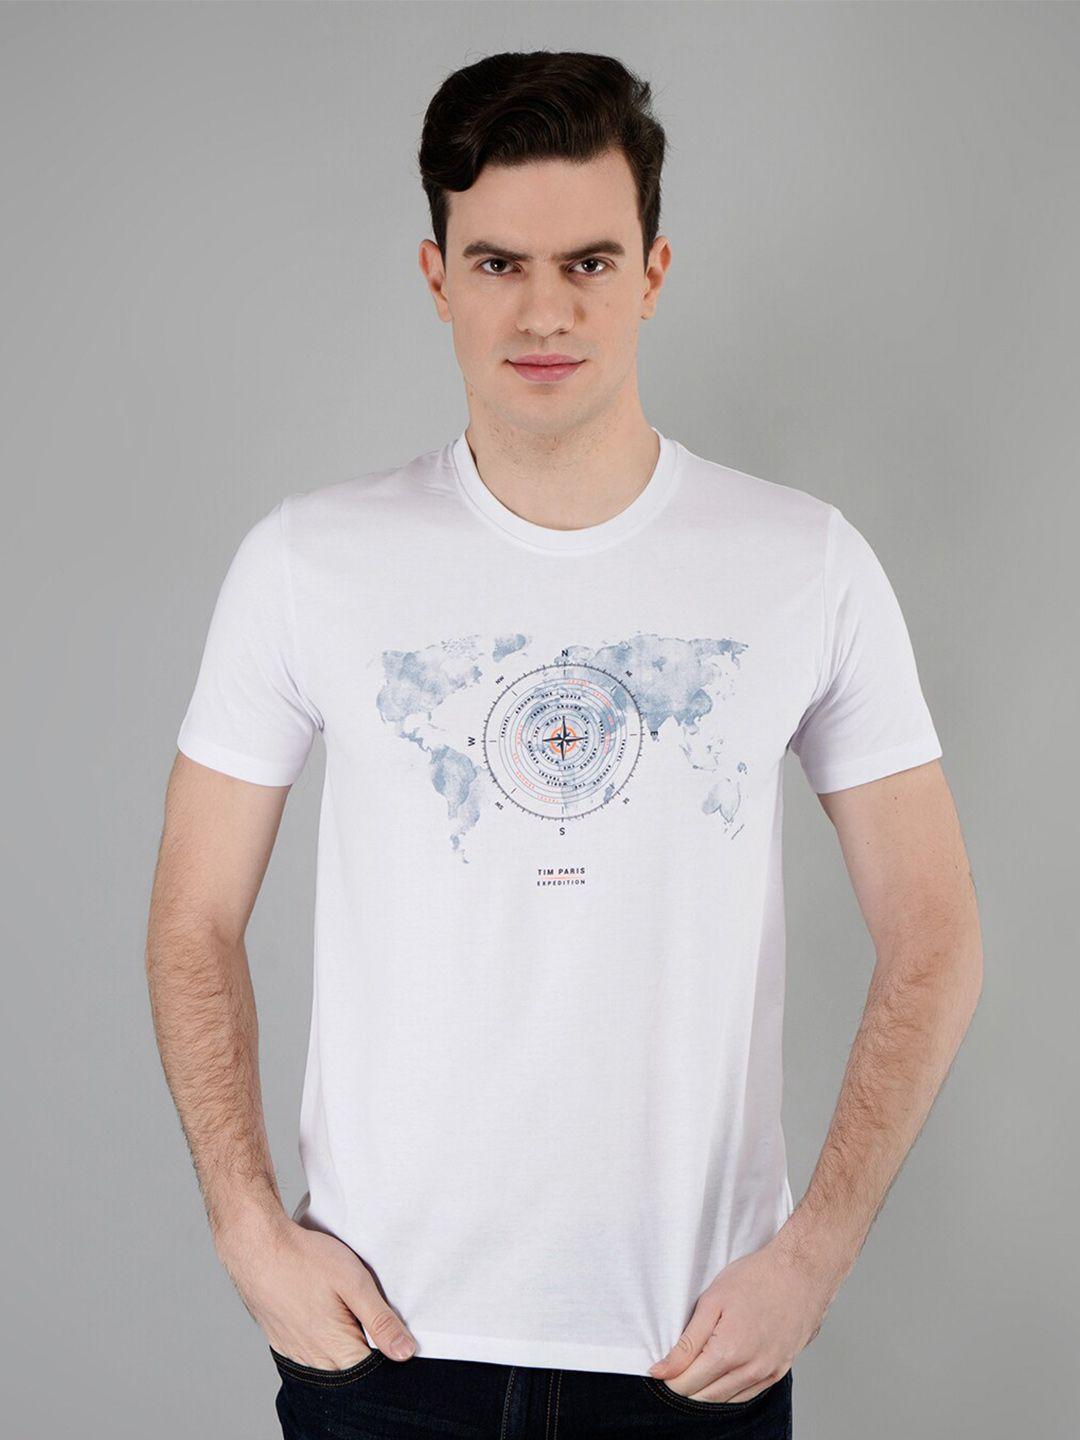 tim paris graphic printed cotton t-shirt